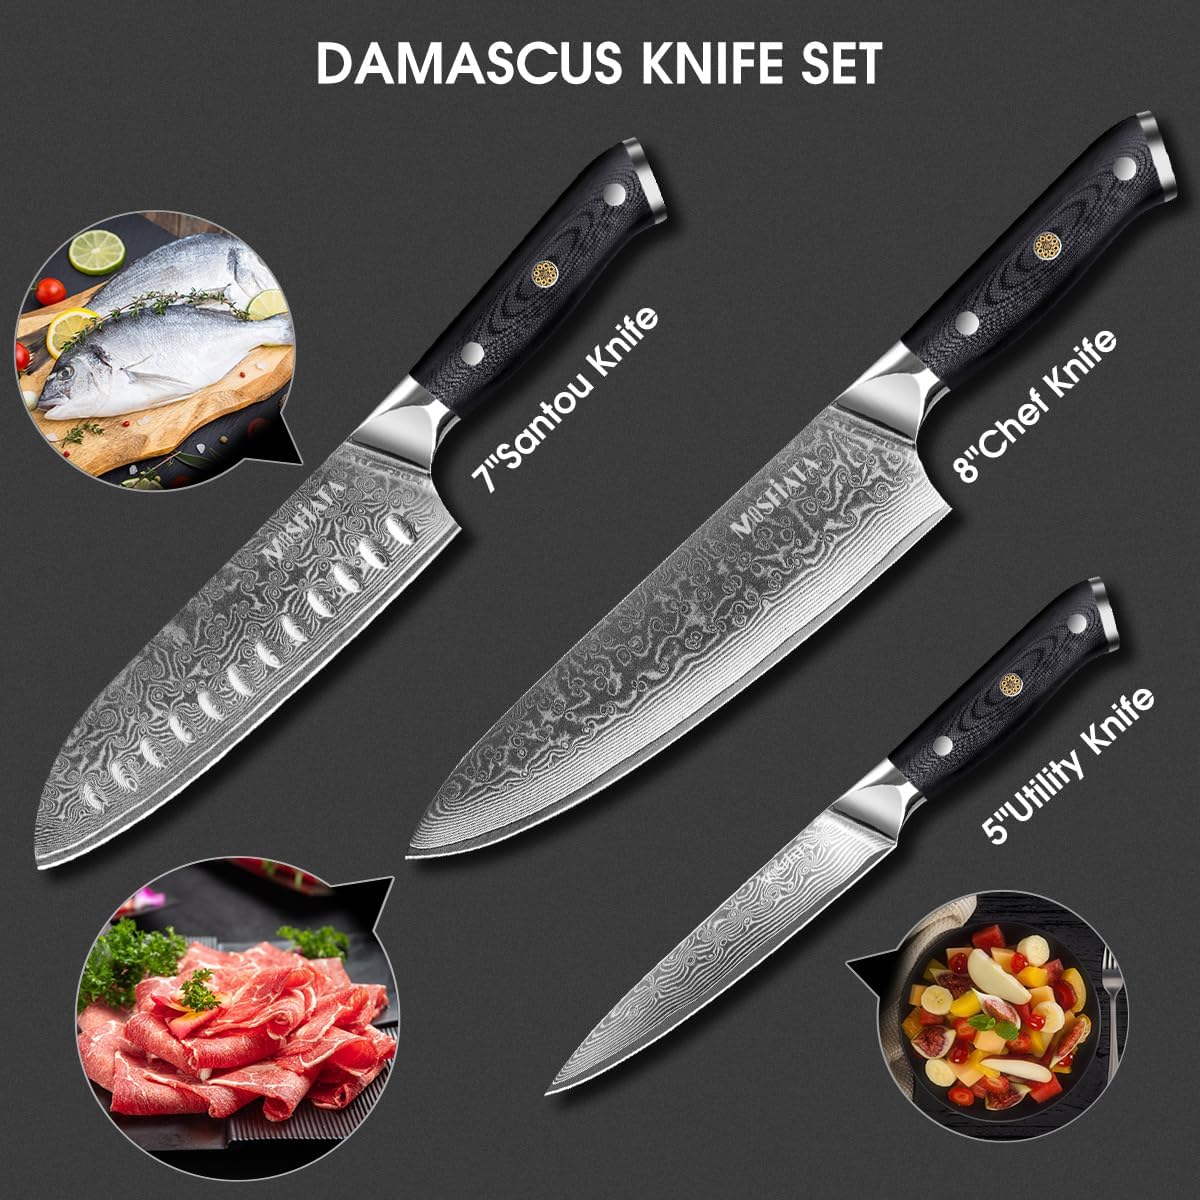 MOSFIATA-8 Super Sharp Professional Chef's Knife Finger Guard Knife Sharp